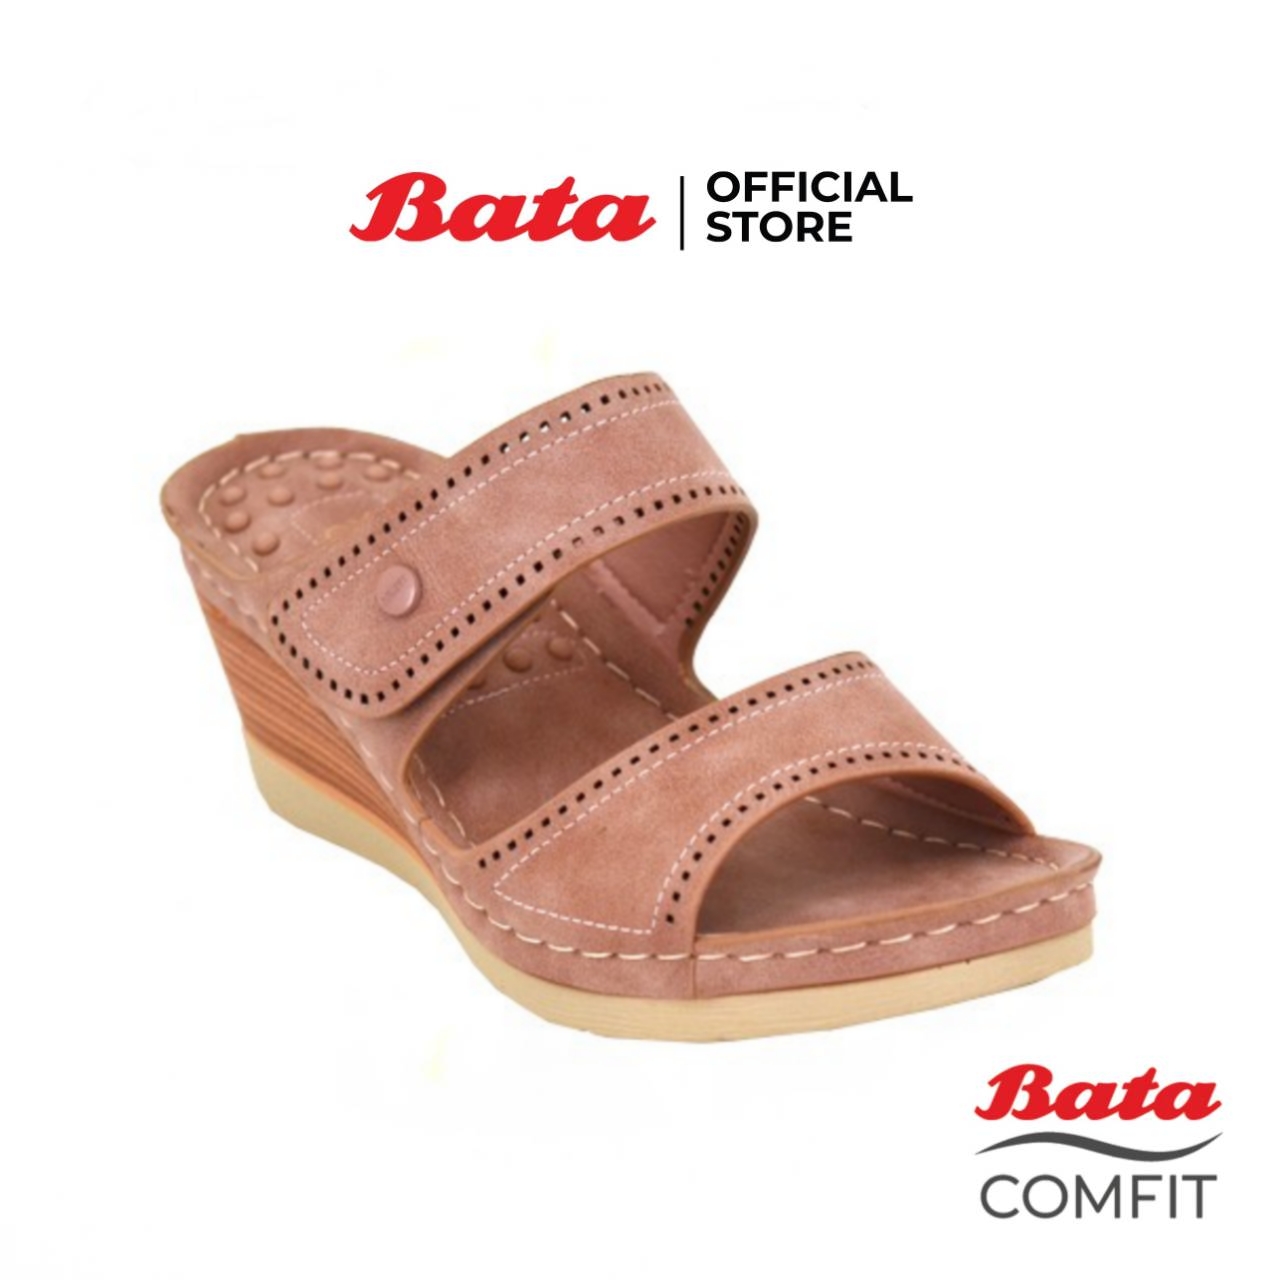 Bata COMFIT รองเท้าแฟชั่นลำลอง WEDGE ส้นเตารีด แบบสวม เปิดส้น สีชมพู รหัส 7615205 Ladiescomfort Fashion